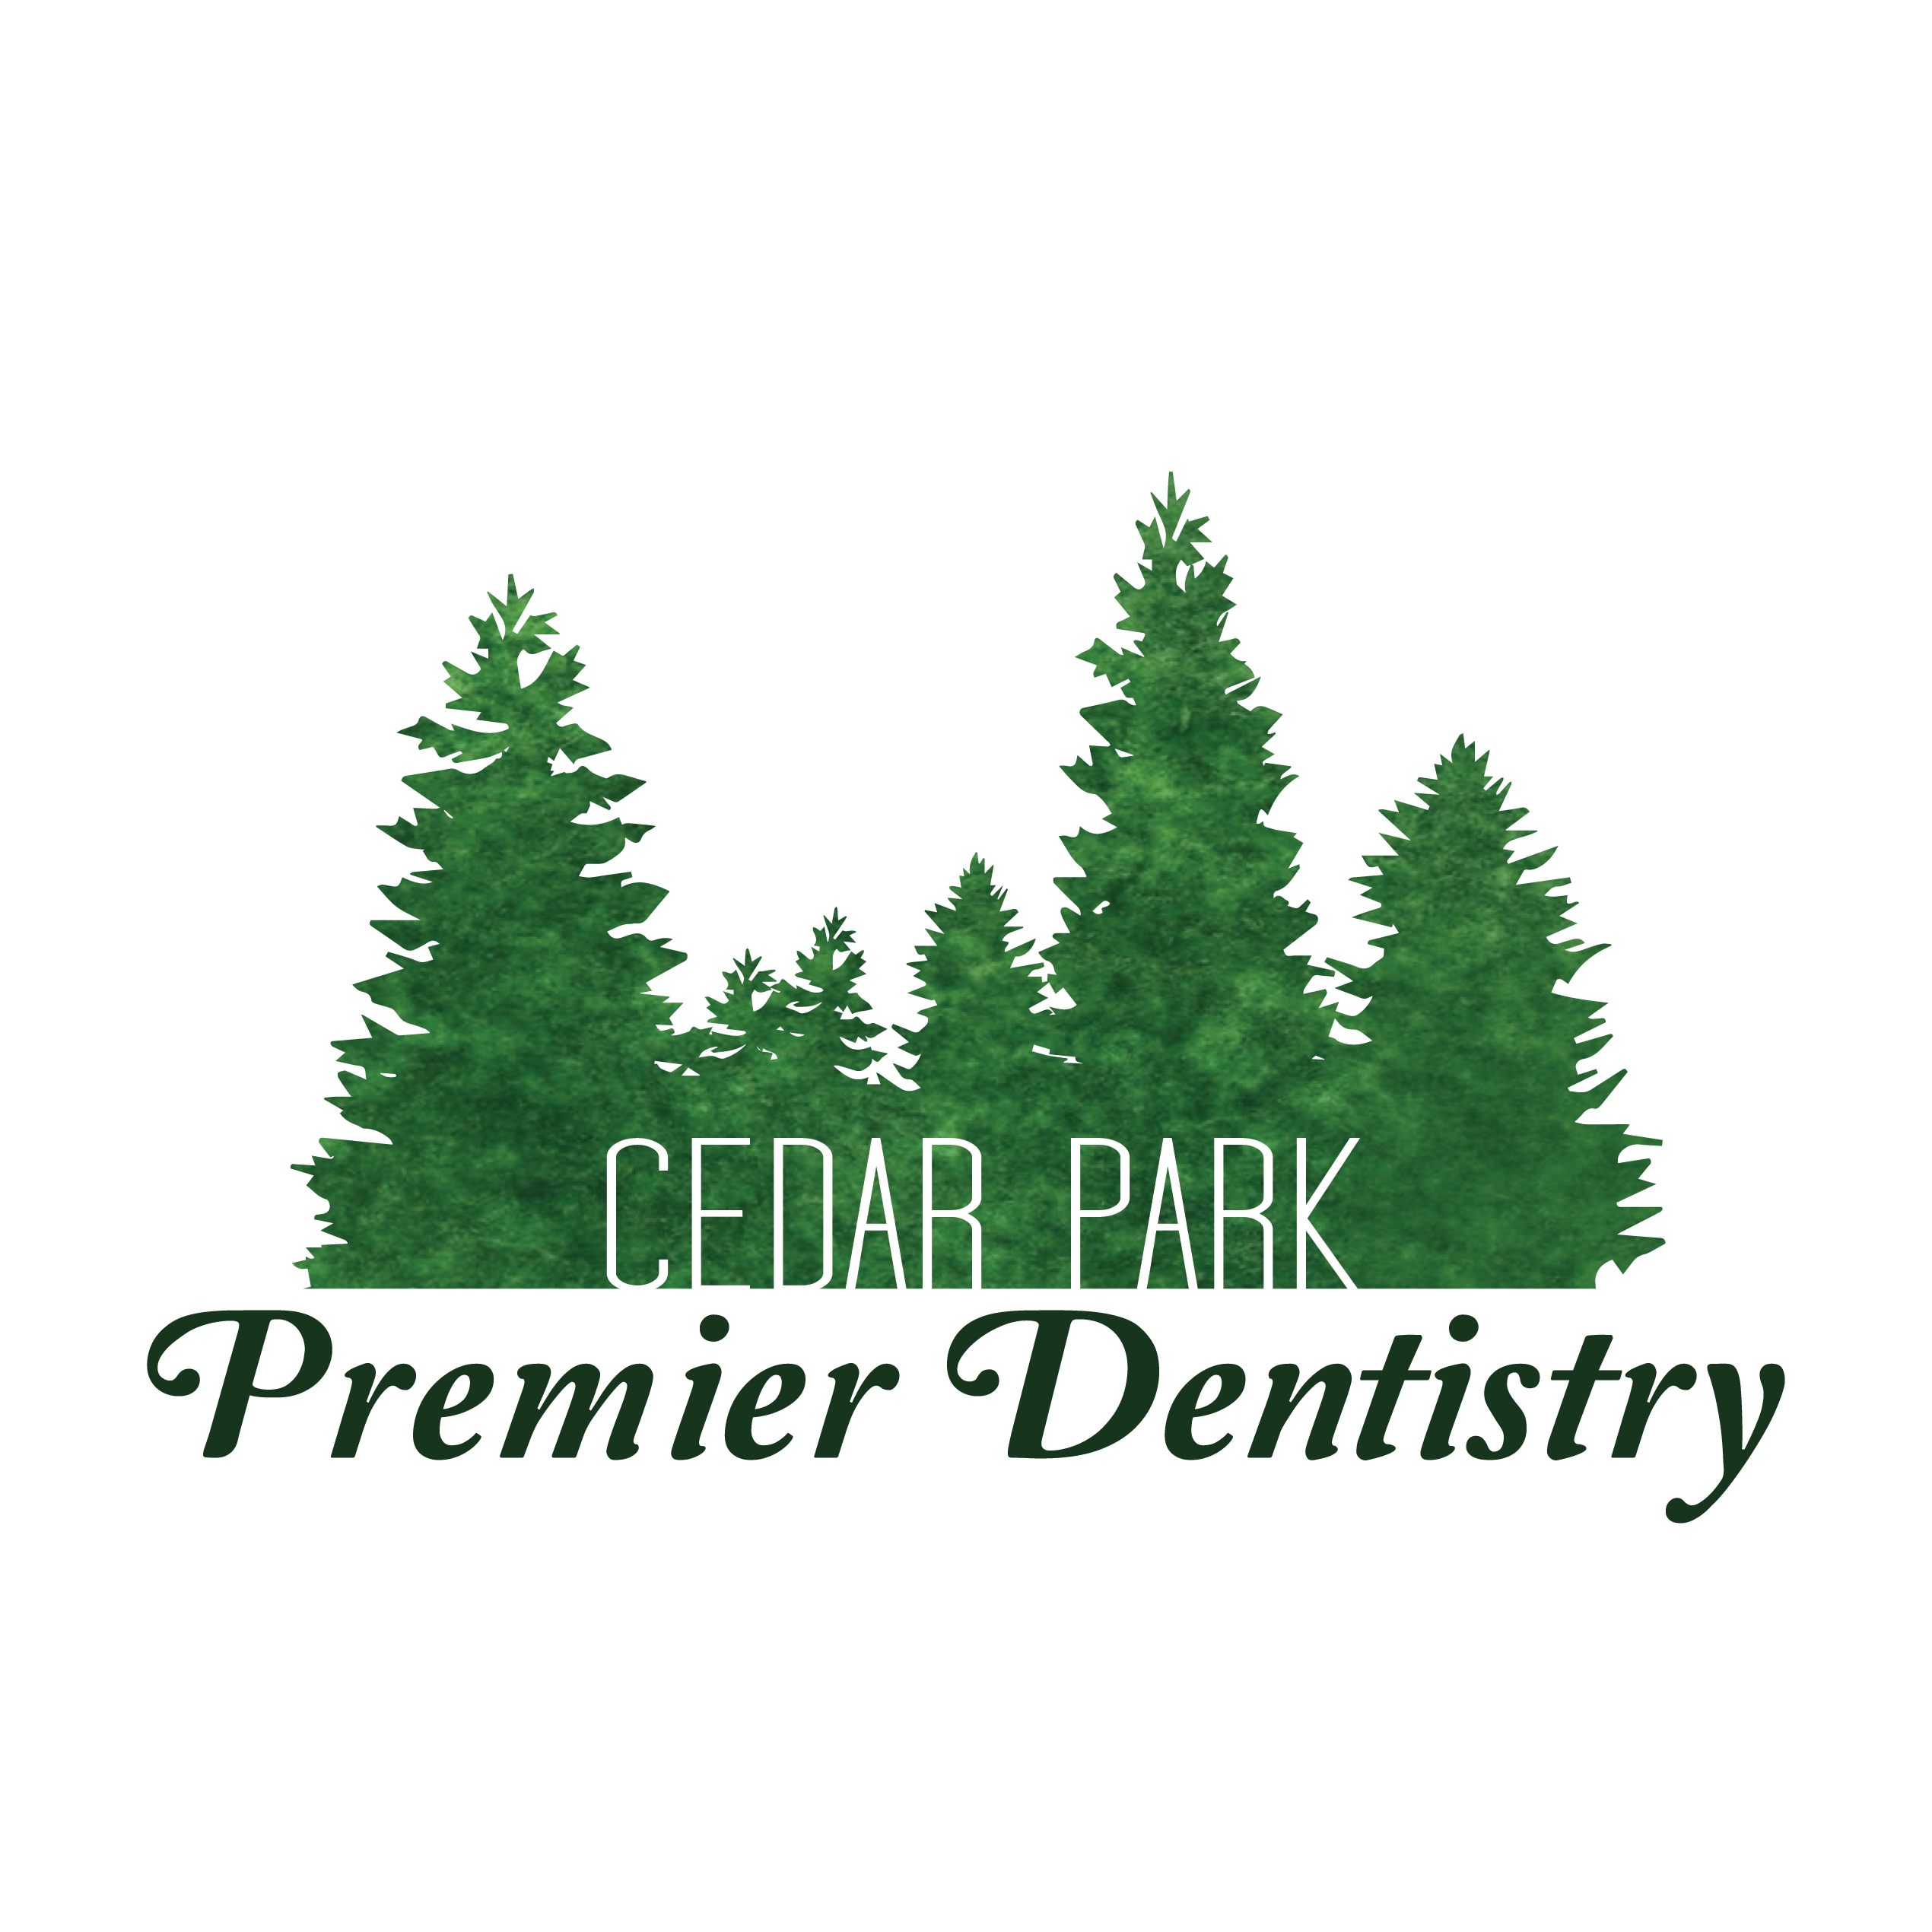 Cedar Park Premier Dentistry
209 Denali Pass Drive, Suite B, 
Cedar Park, TX 78613
(512) 782-0821
https://www.cedarparkdental.com/